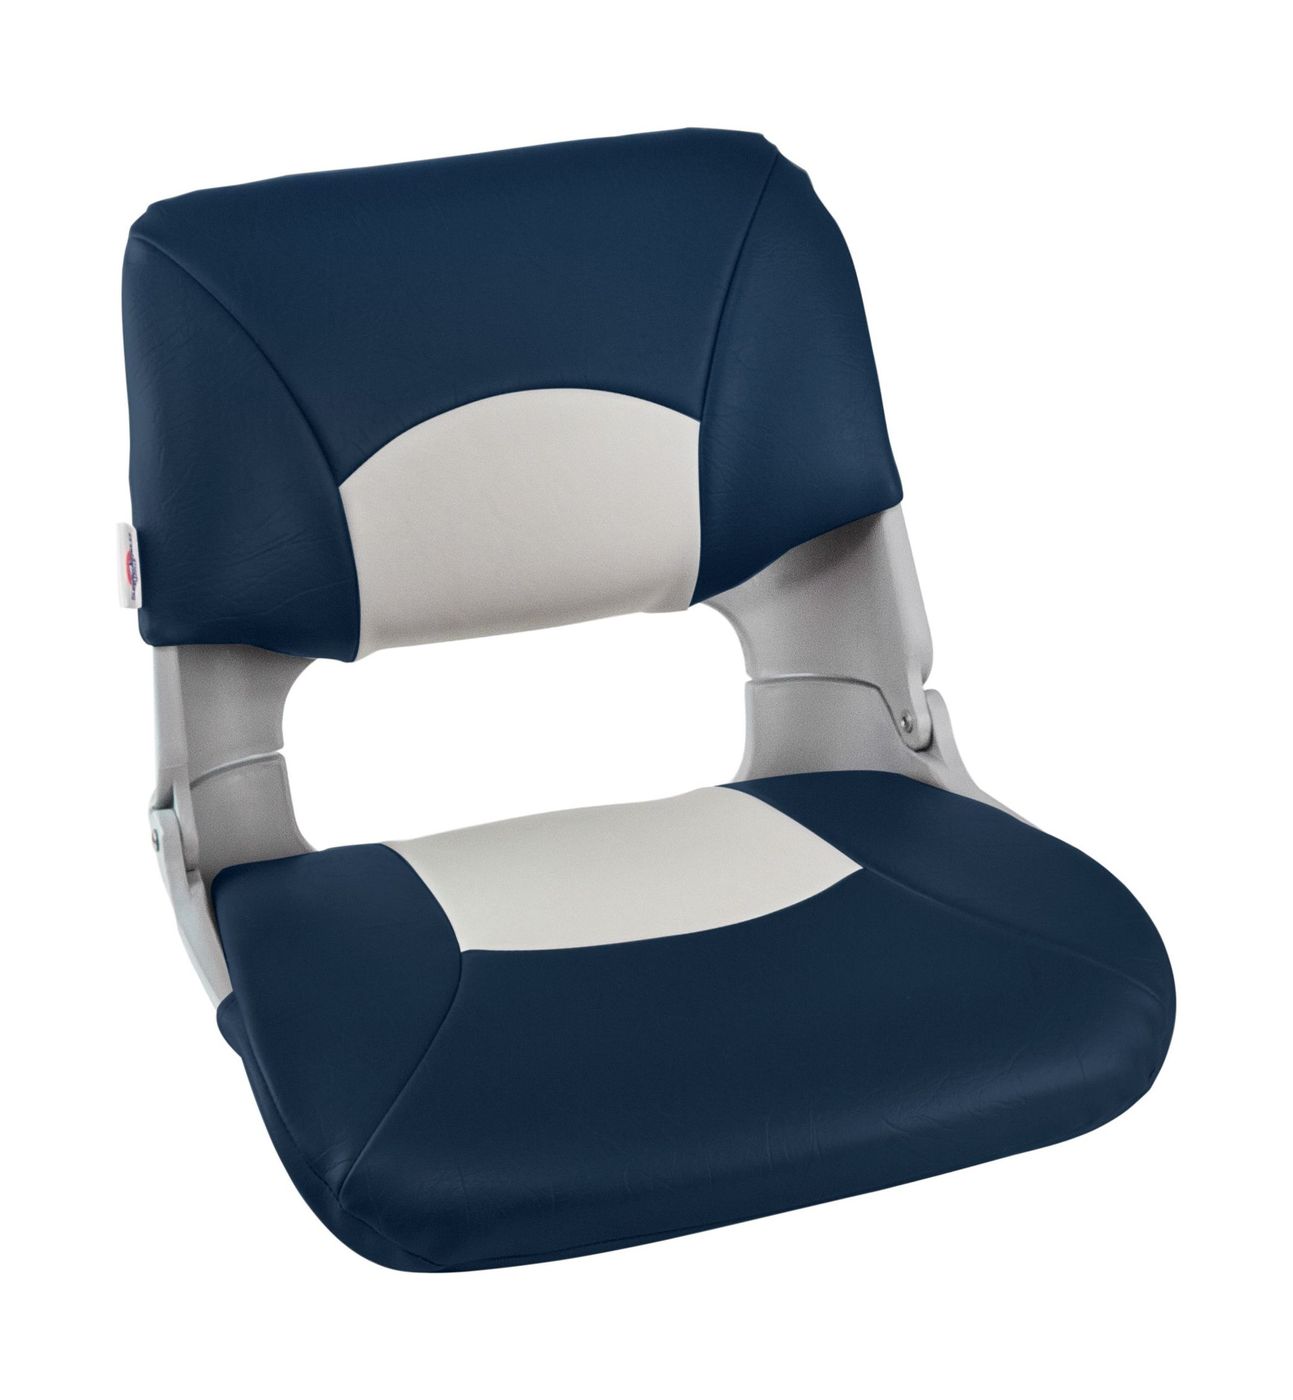 Кресло складное мягкое SKIPPER, цвет серый/синий 1061019 кресло складное мягкое skipper обивка камуфляжная ткань 1061021